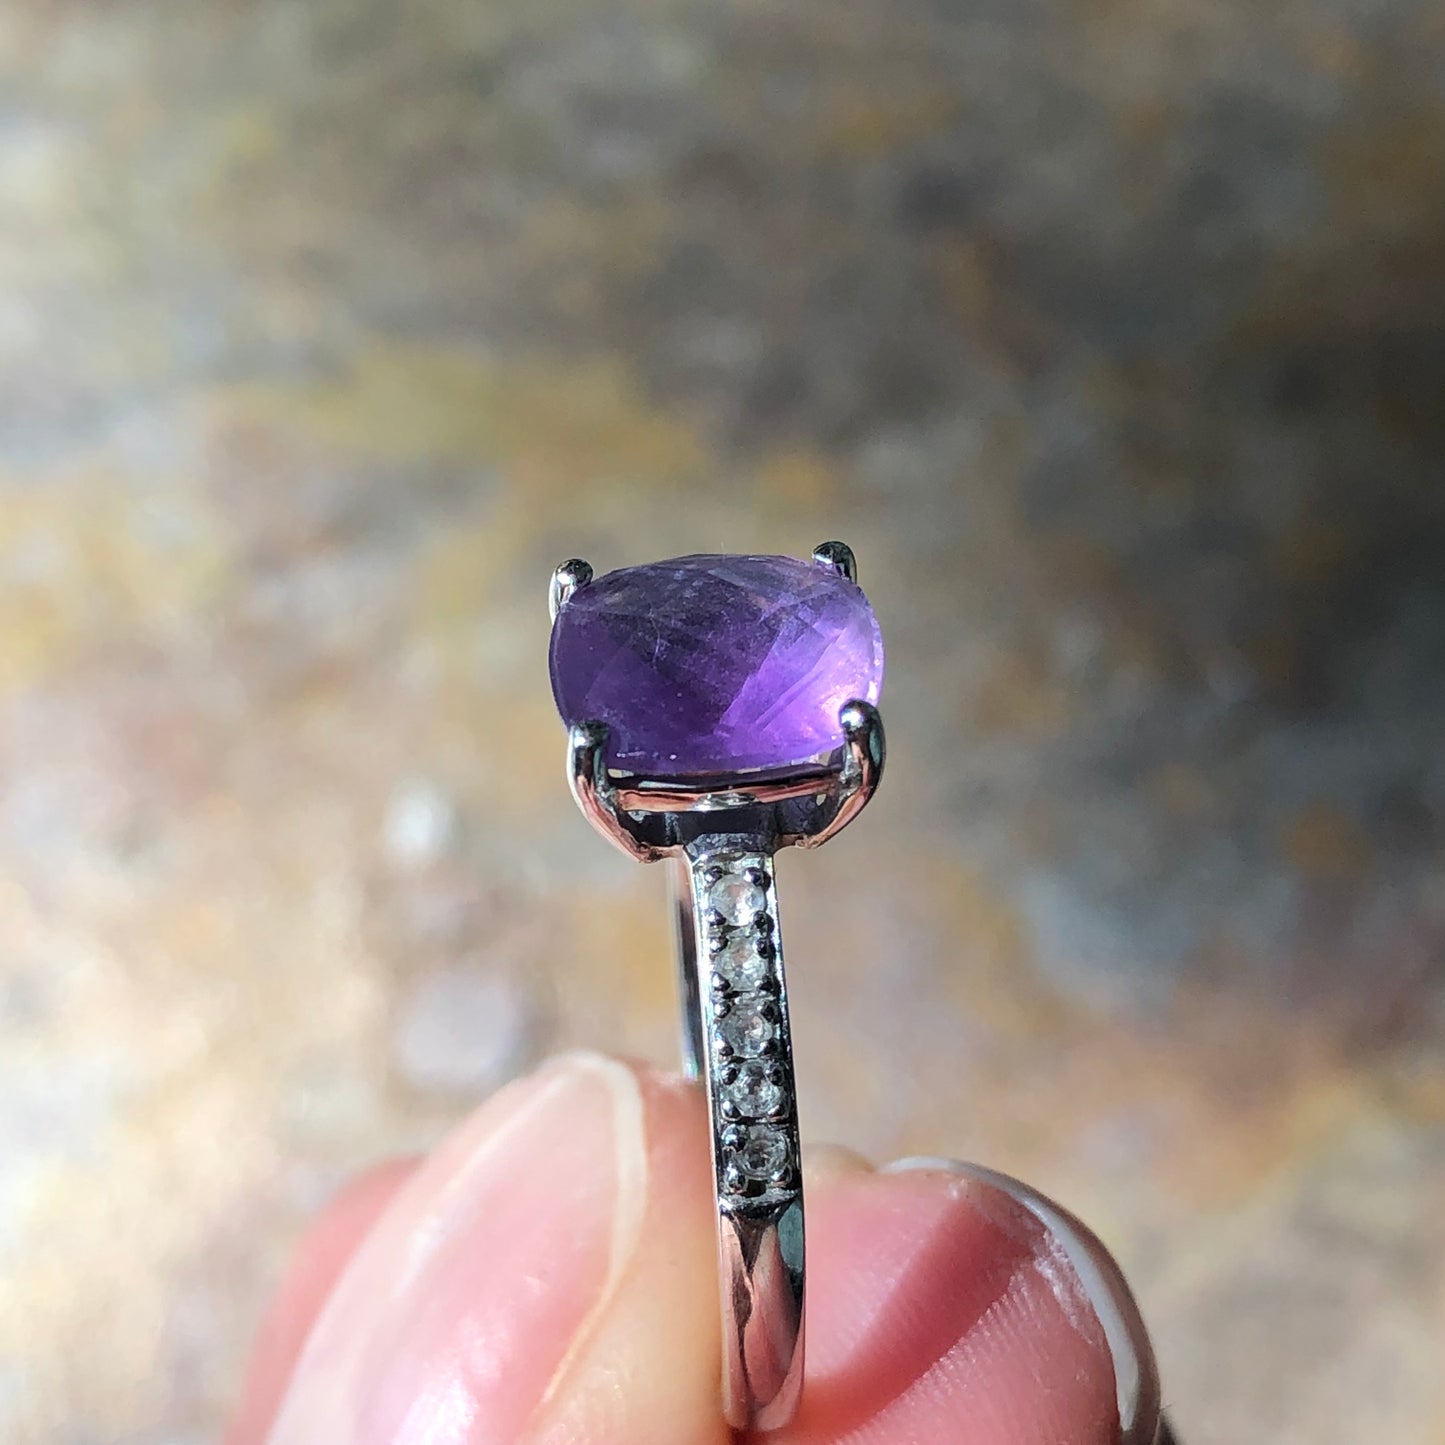 14KT White Gold Pave Diamond + Genuine Purple Amethyst Estate Ring - Legacy Saint Jewelry